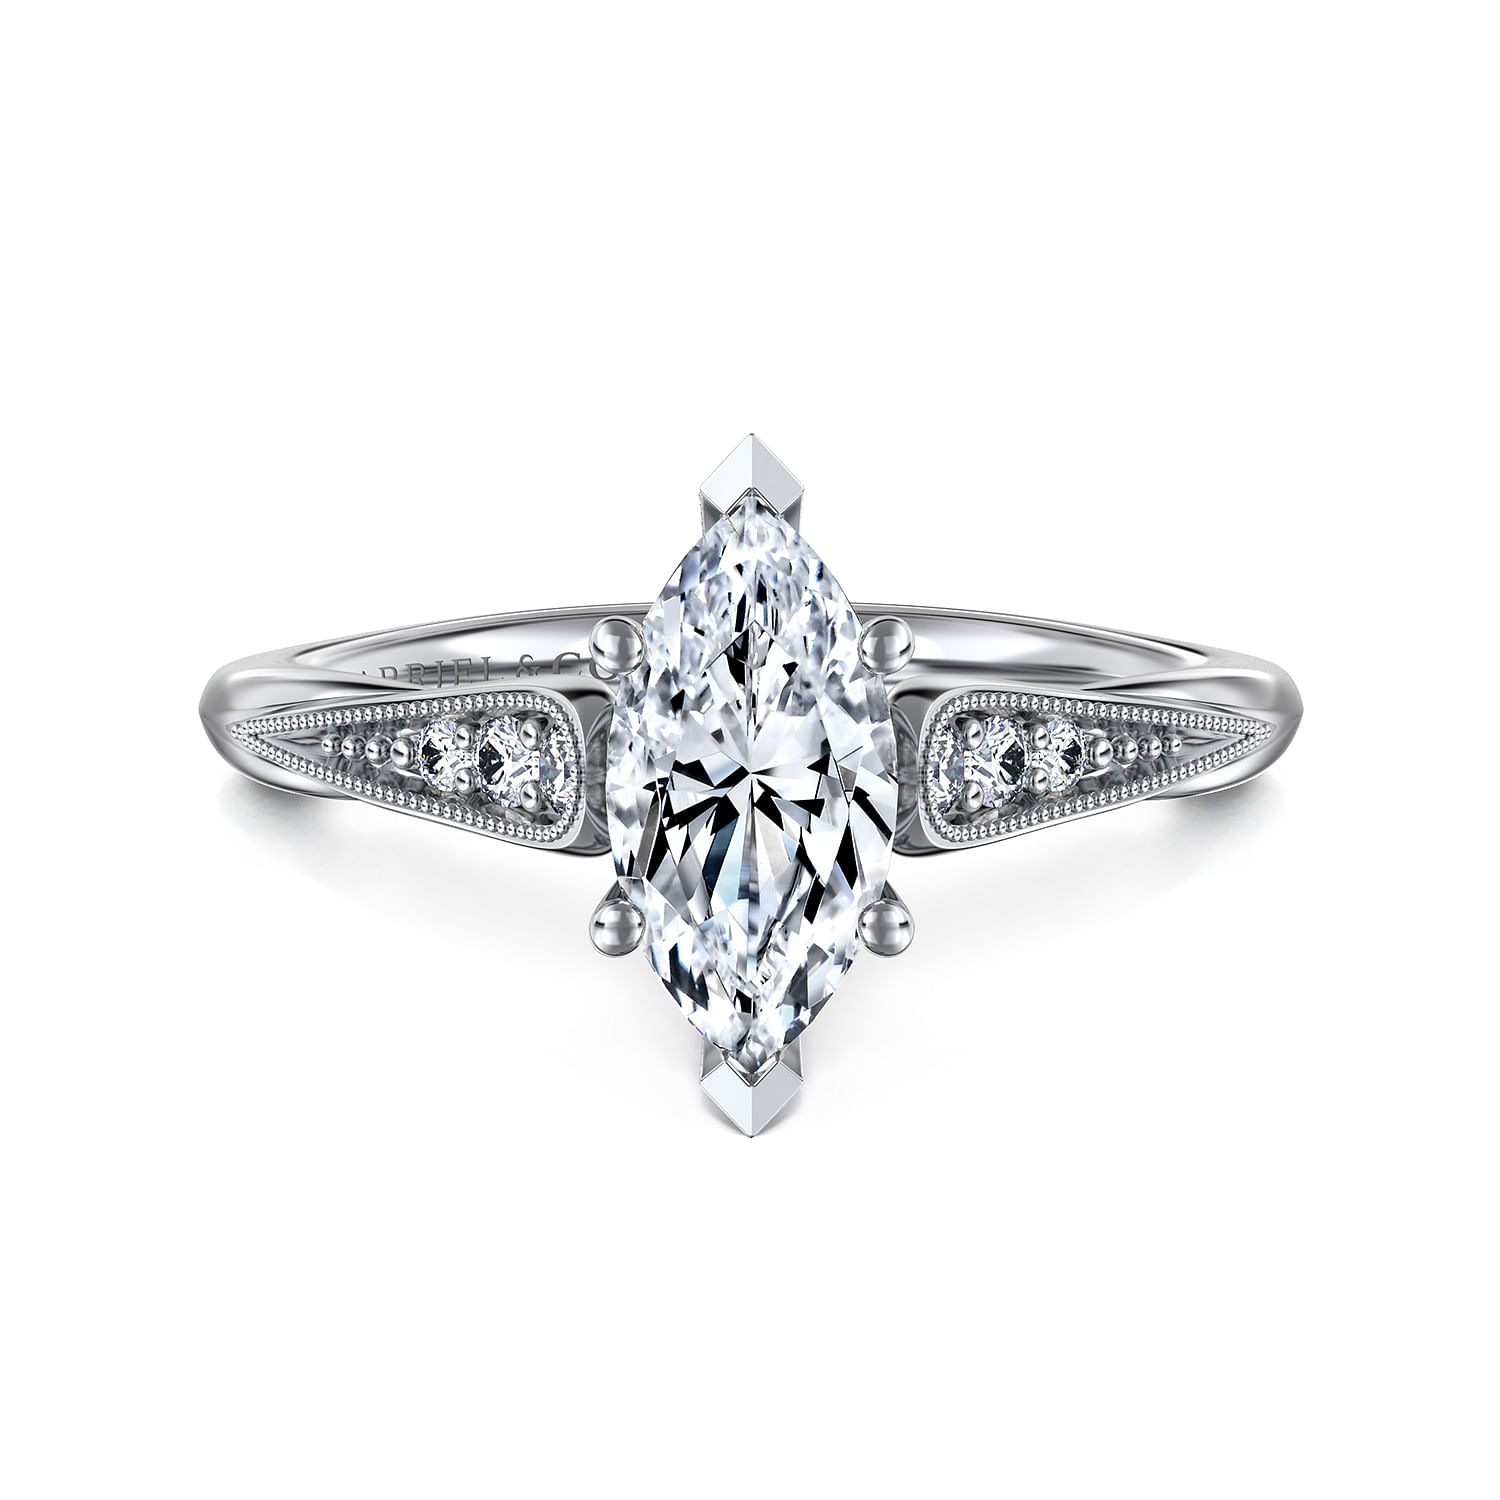 Riley - 14K White Gold Marquise Shape Diamond Engagement Ring